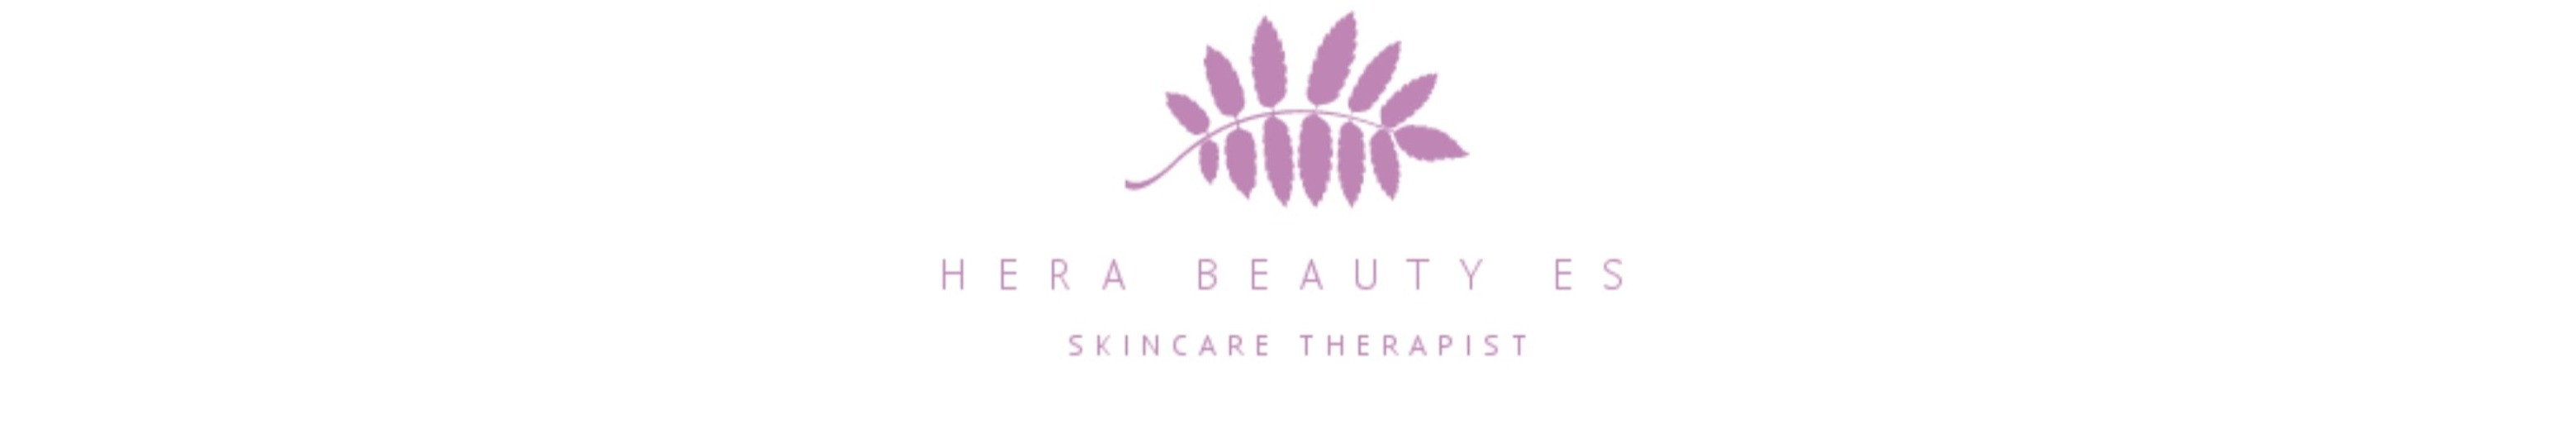 Skincare & Beauty Treatments. Luxury Facials | Dermaplane   